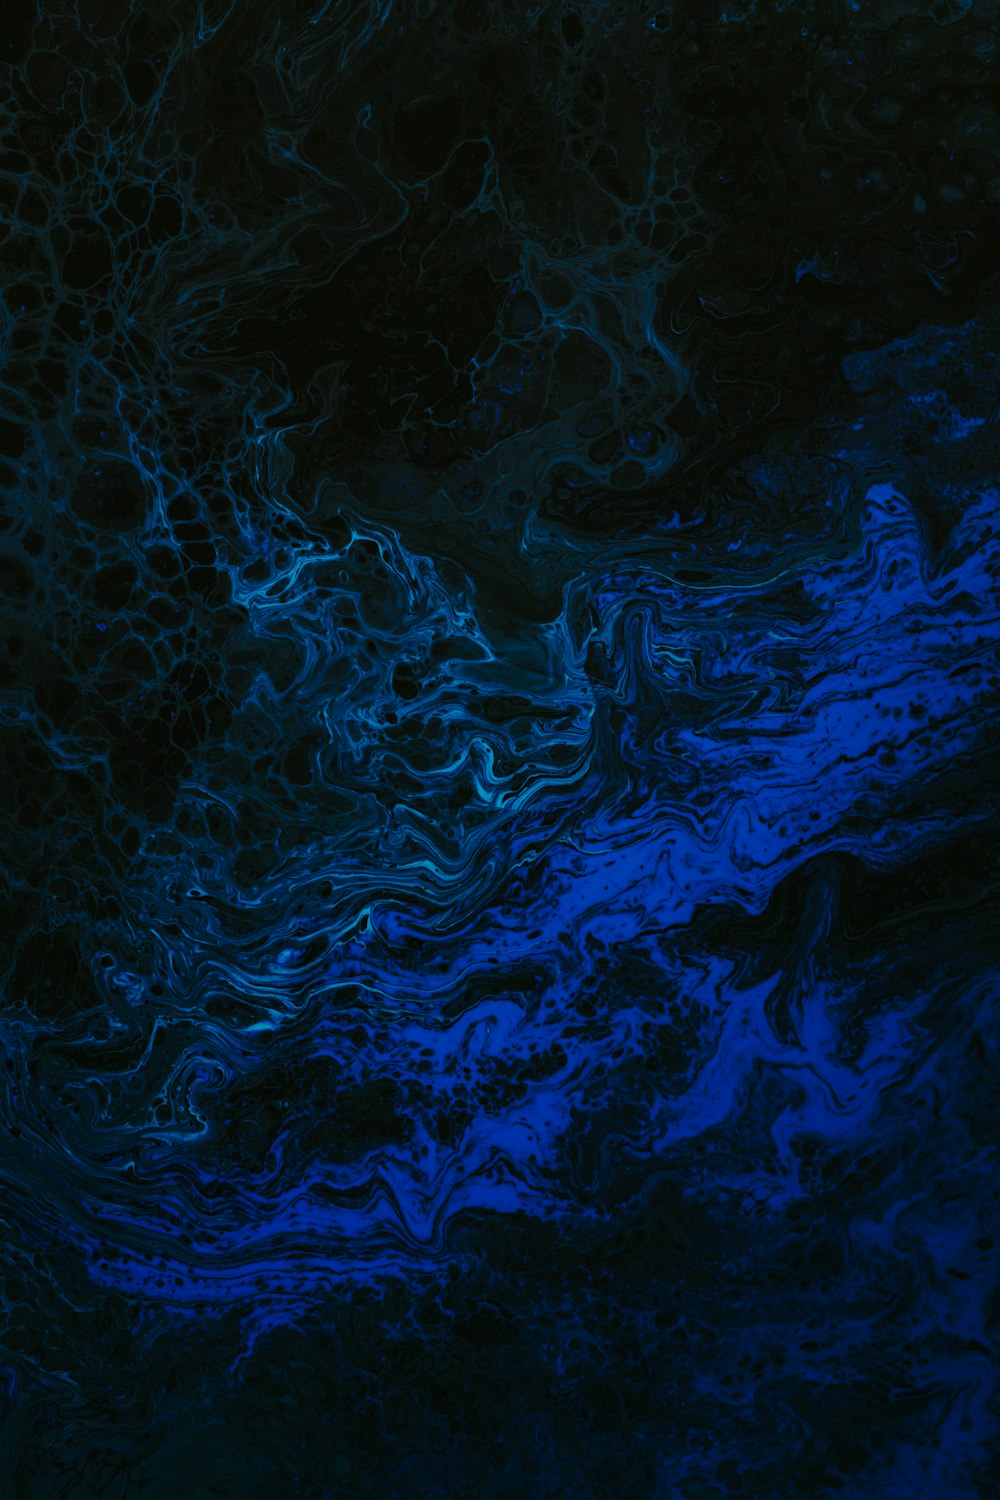 1000+ Dark Blue Background Pictures | Download Free Images on Unsplash